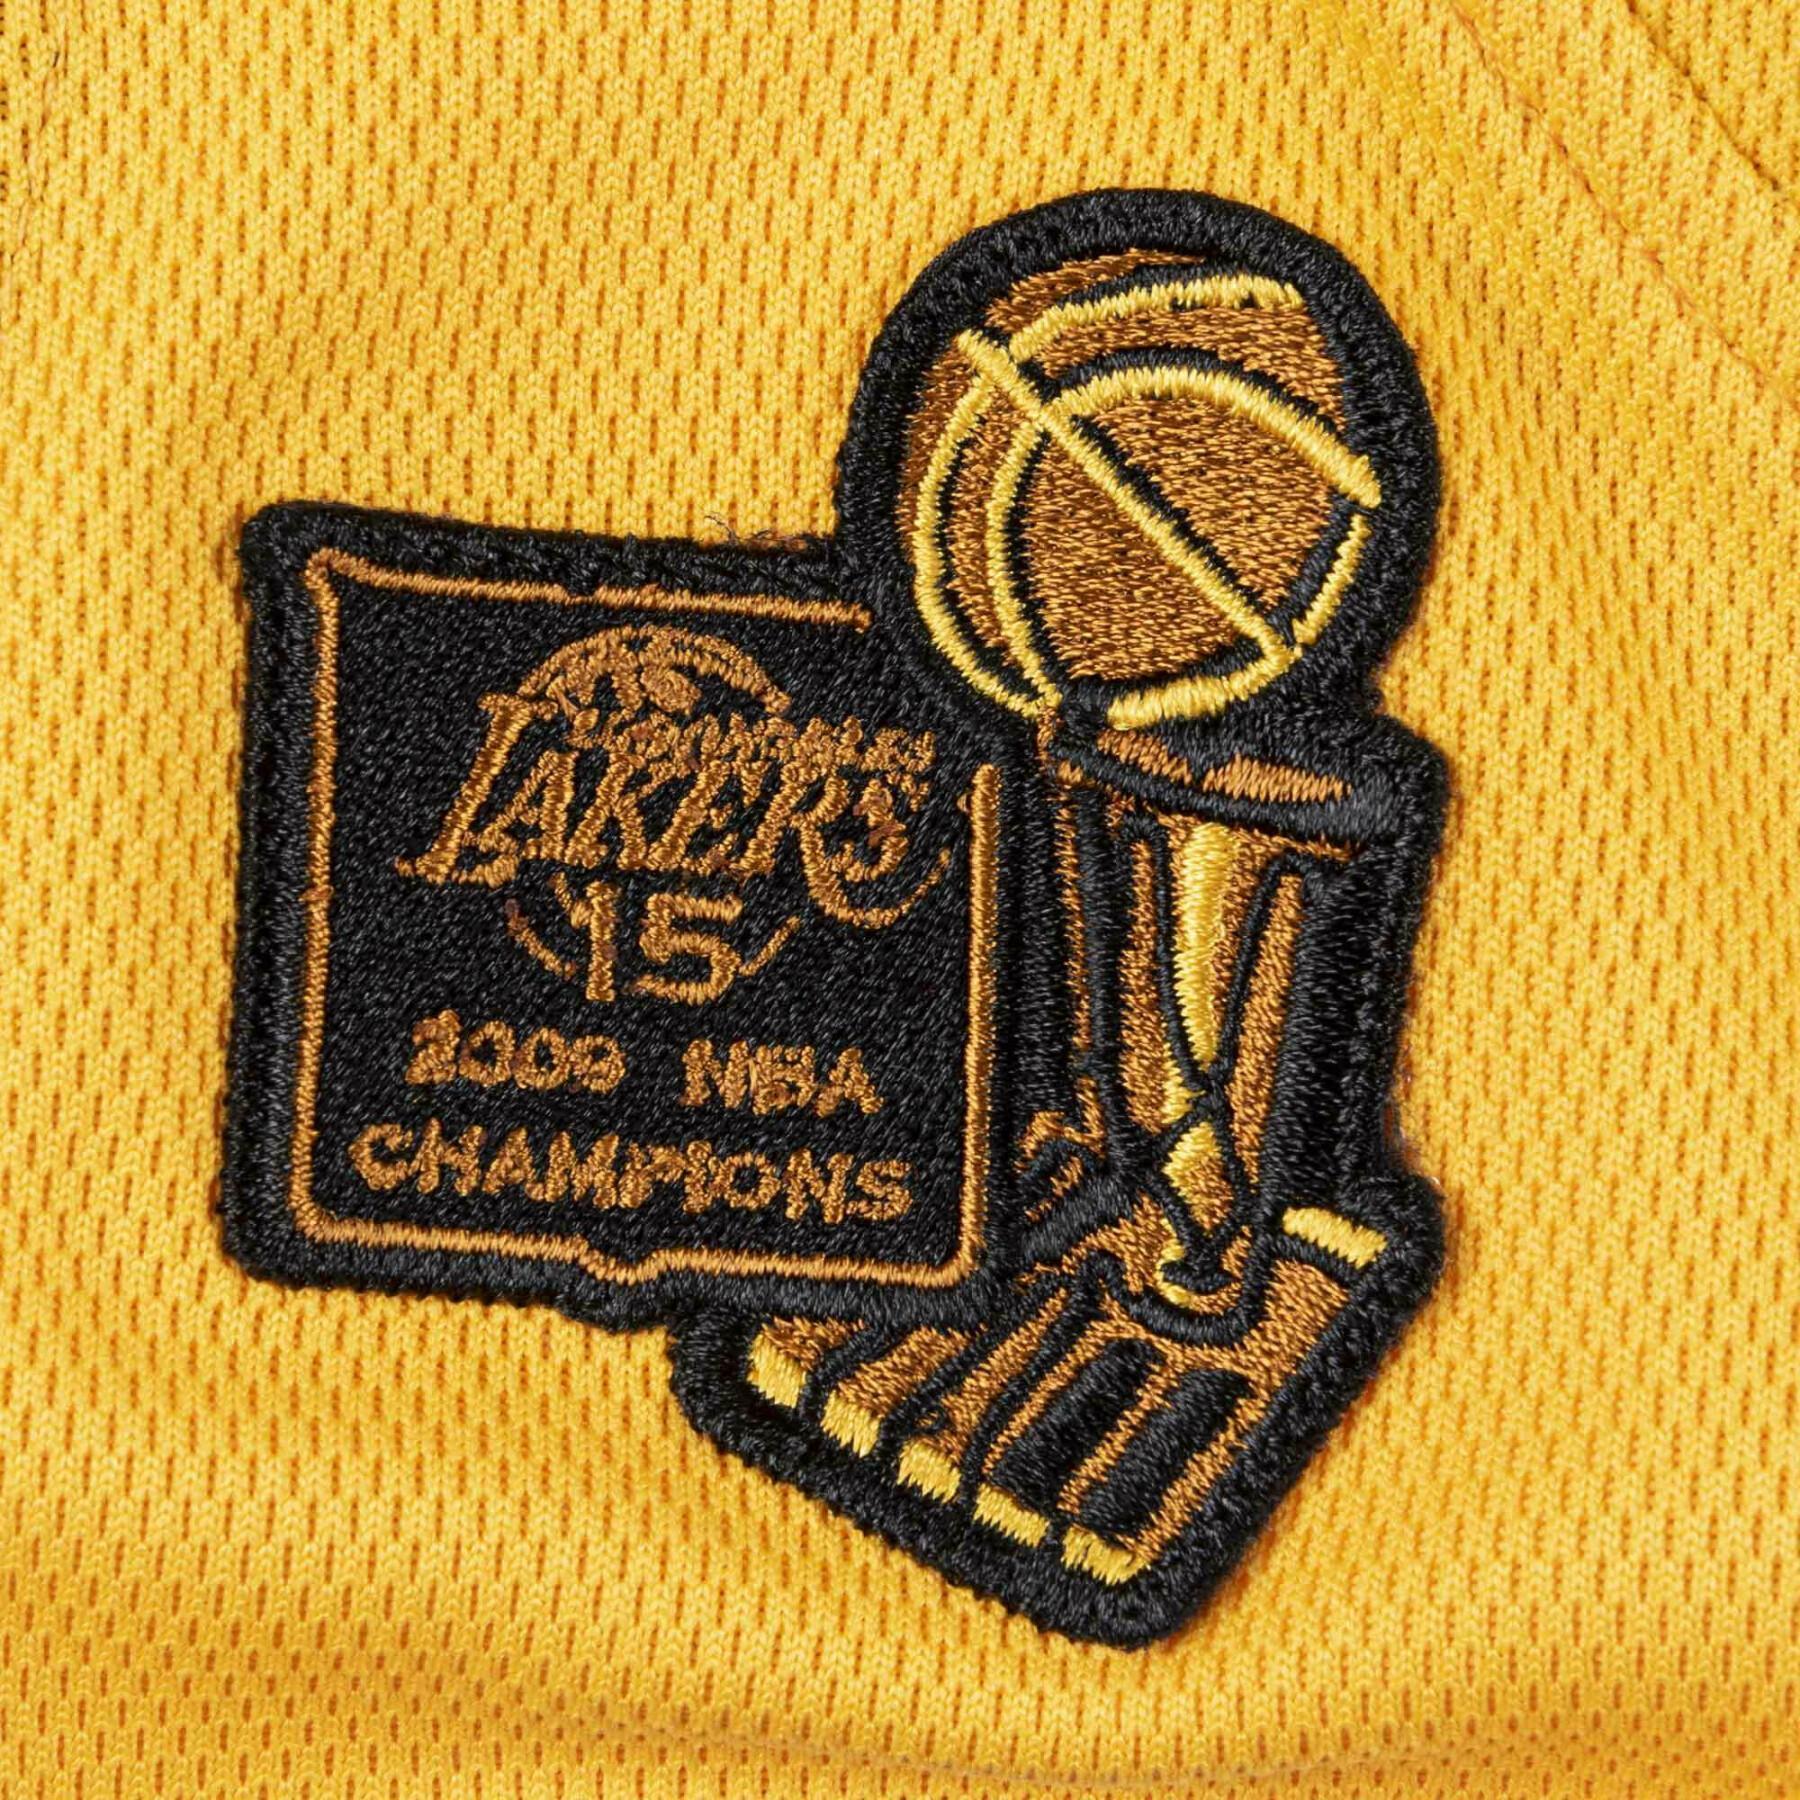 Autentyczna koszulka Los Angeles Lakers